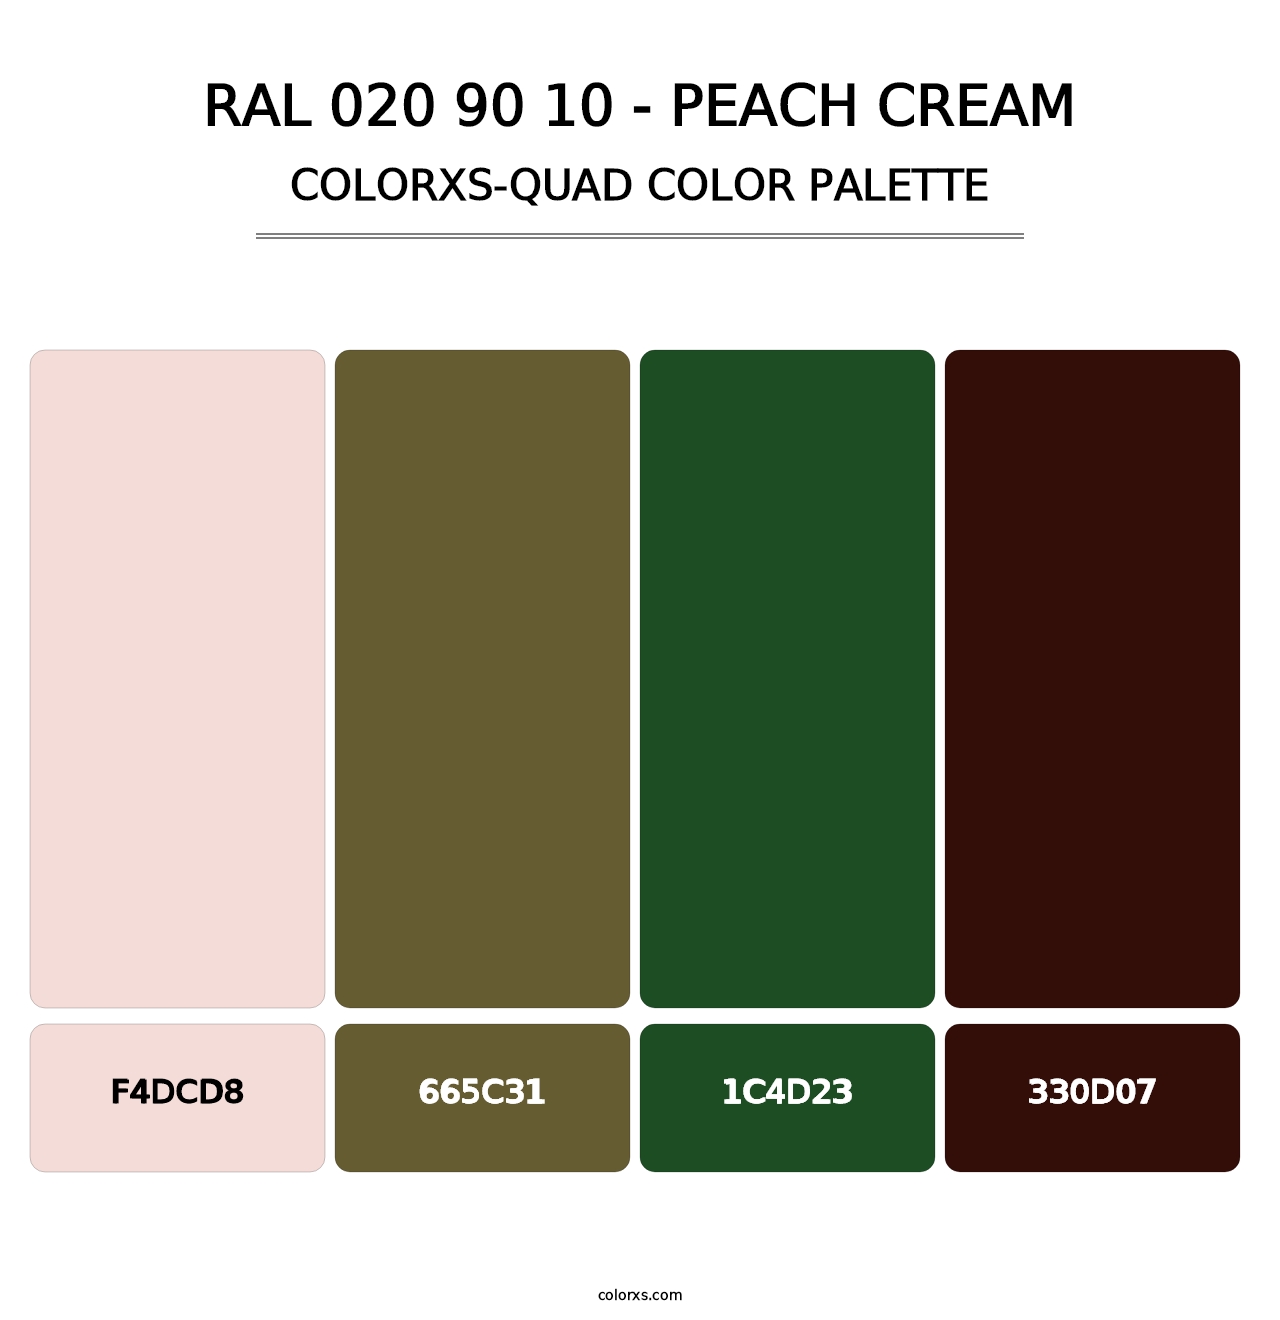 RAL 020 90 10 - Peach Cream - Colorxs Quad Palette